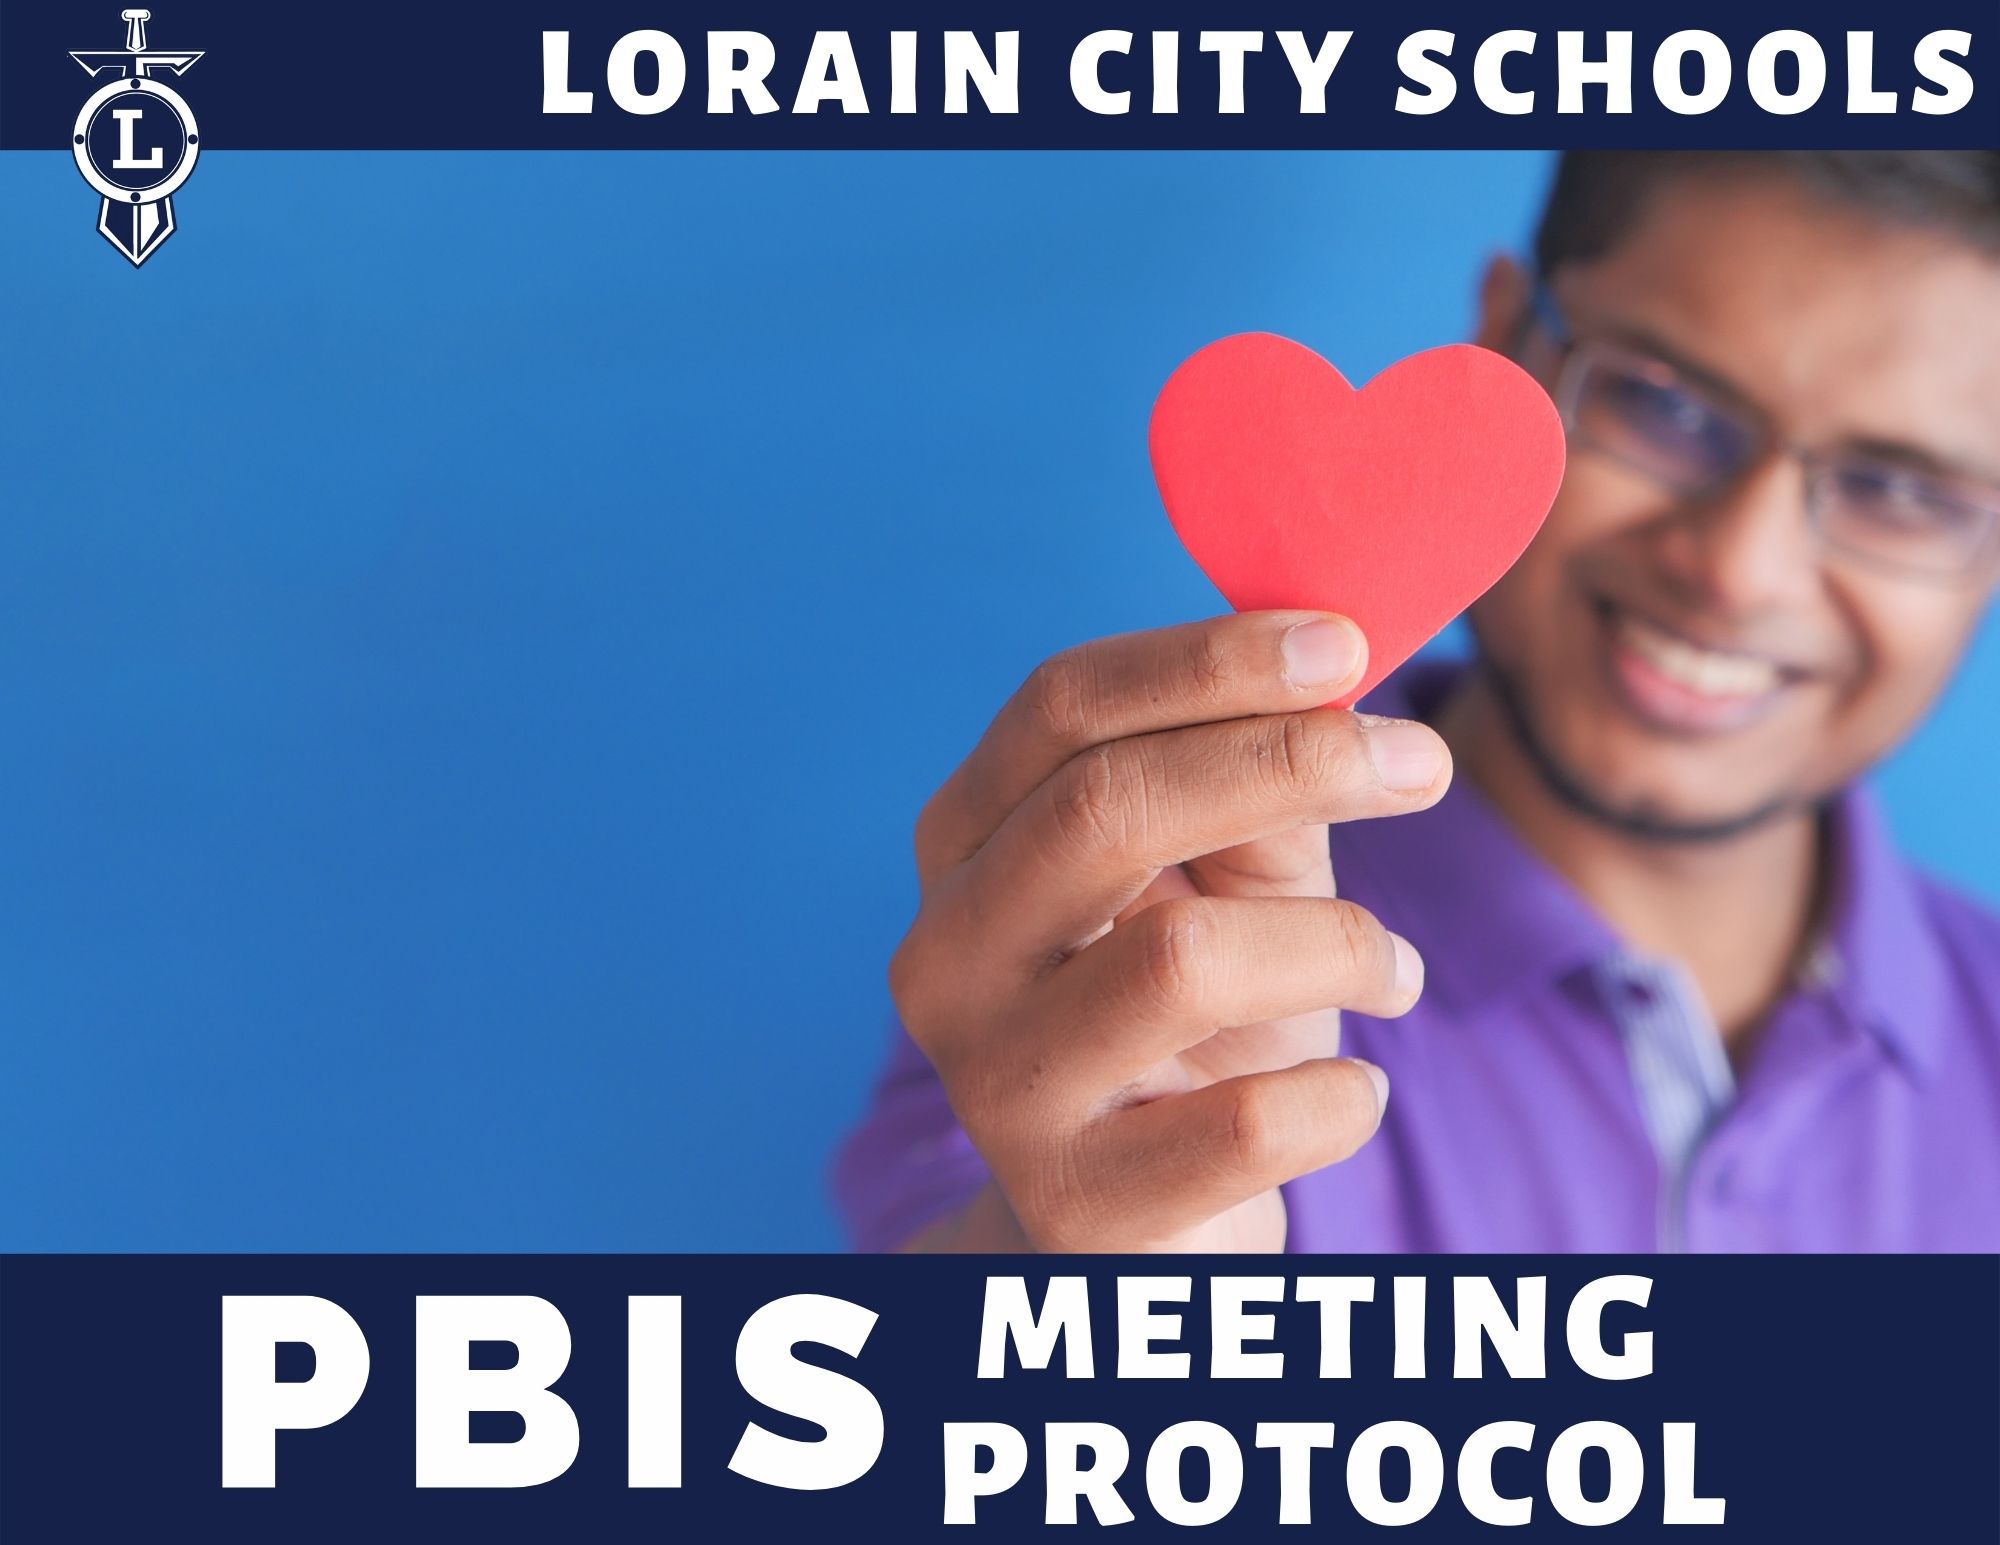 PBIS Meeting Protocol